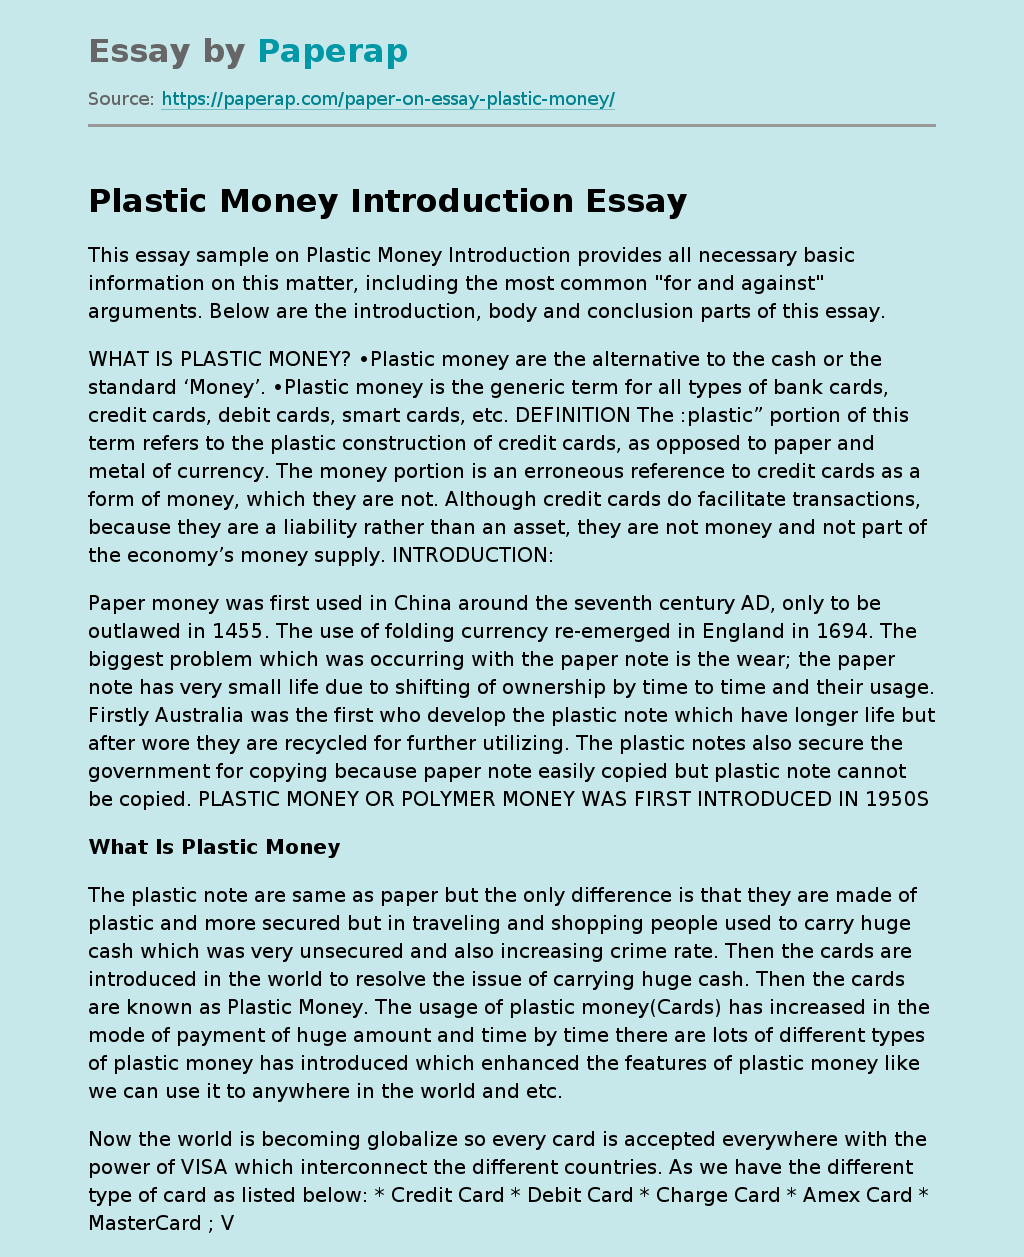 Plastic Money Introduction